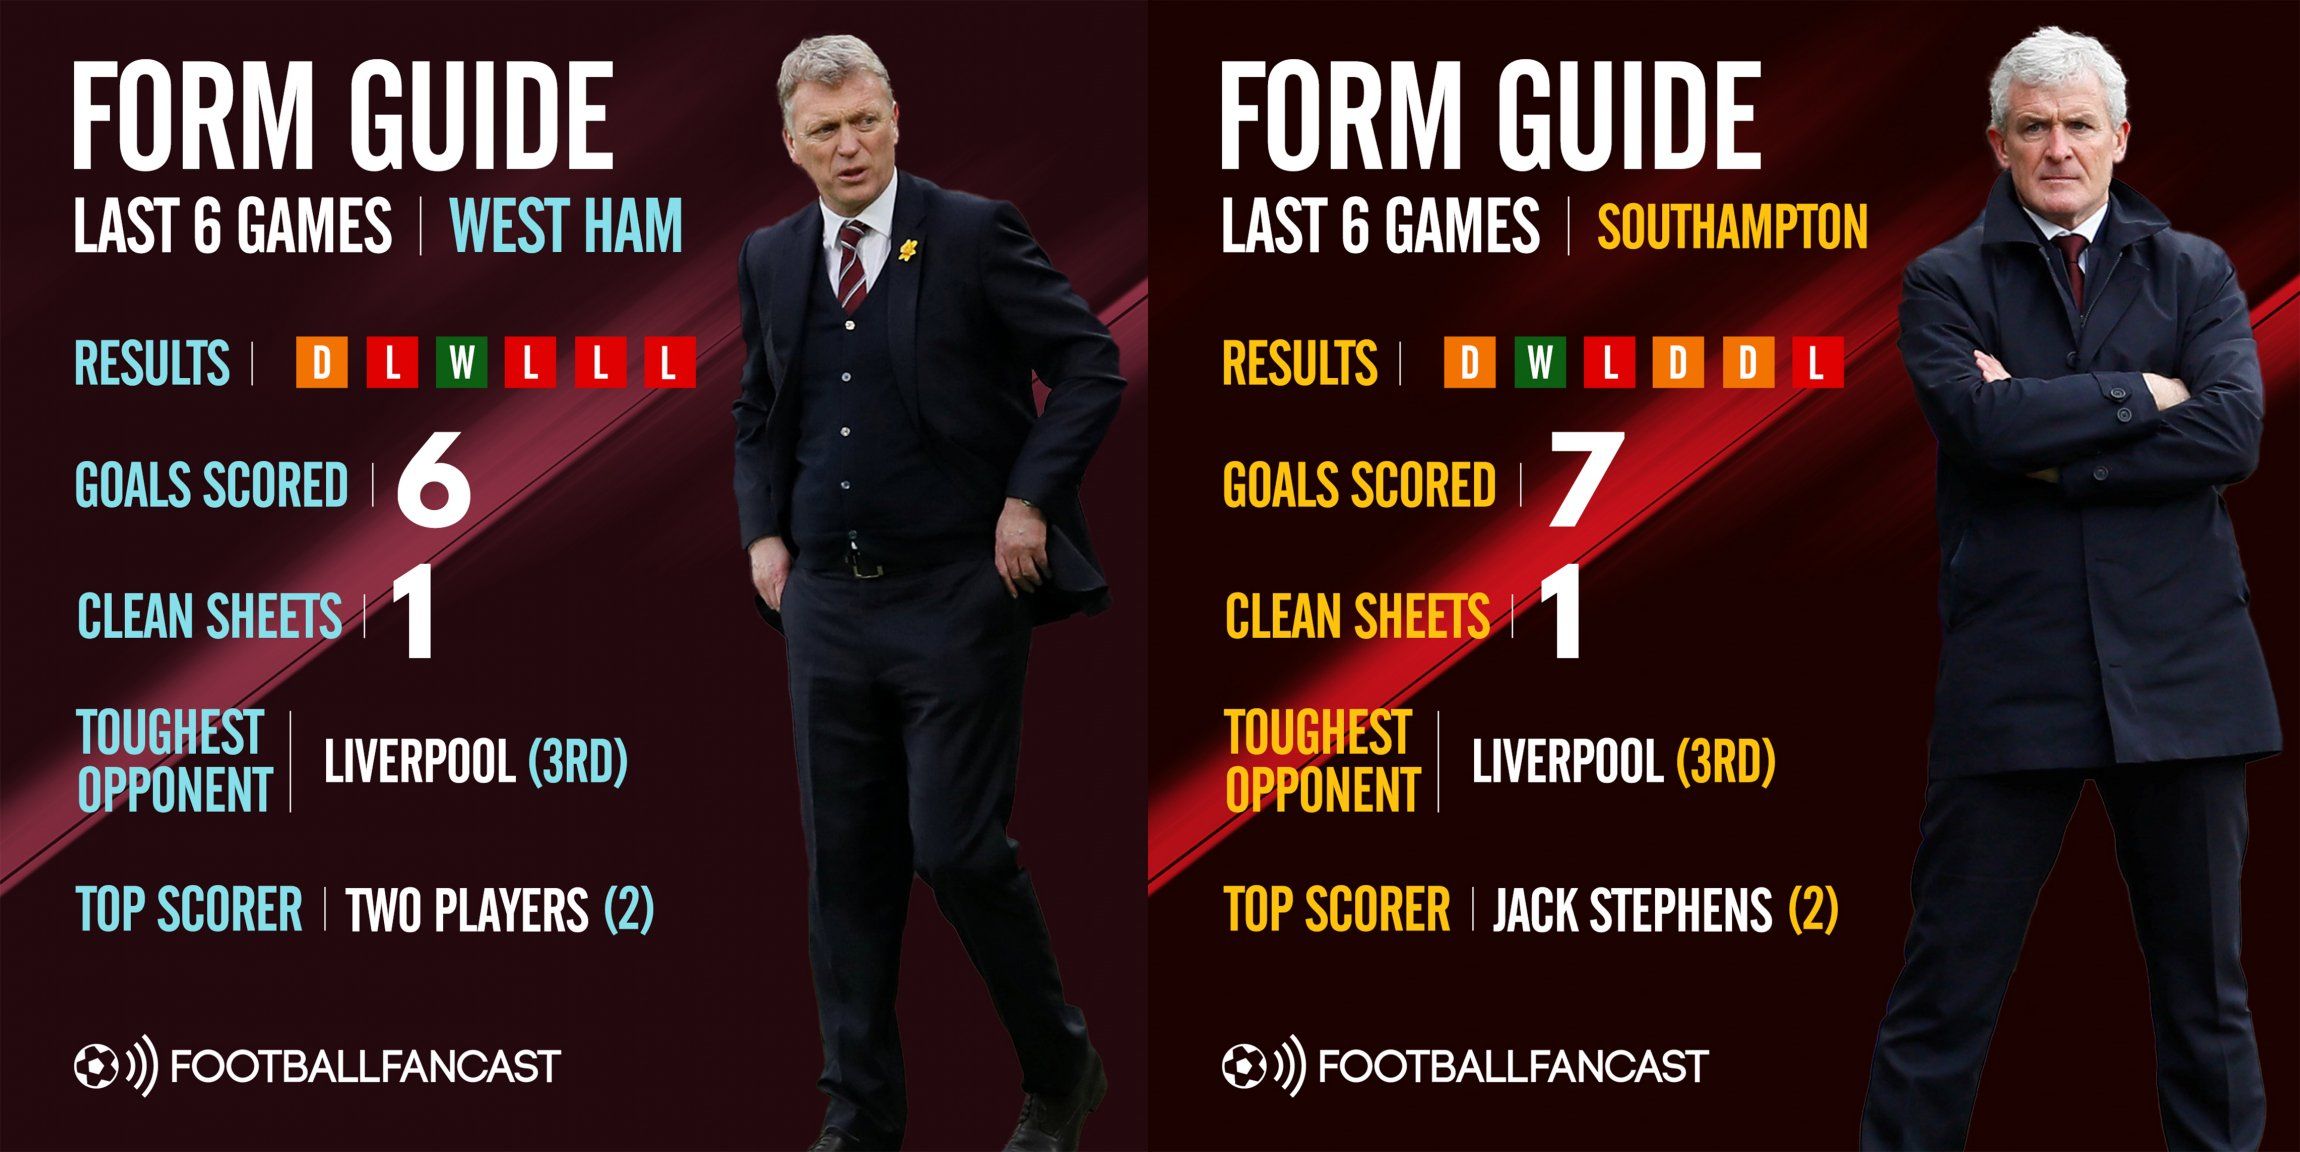 West Ham vs Southampton form guide